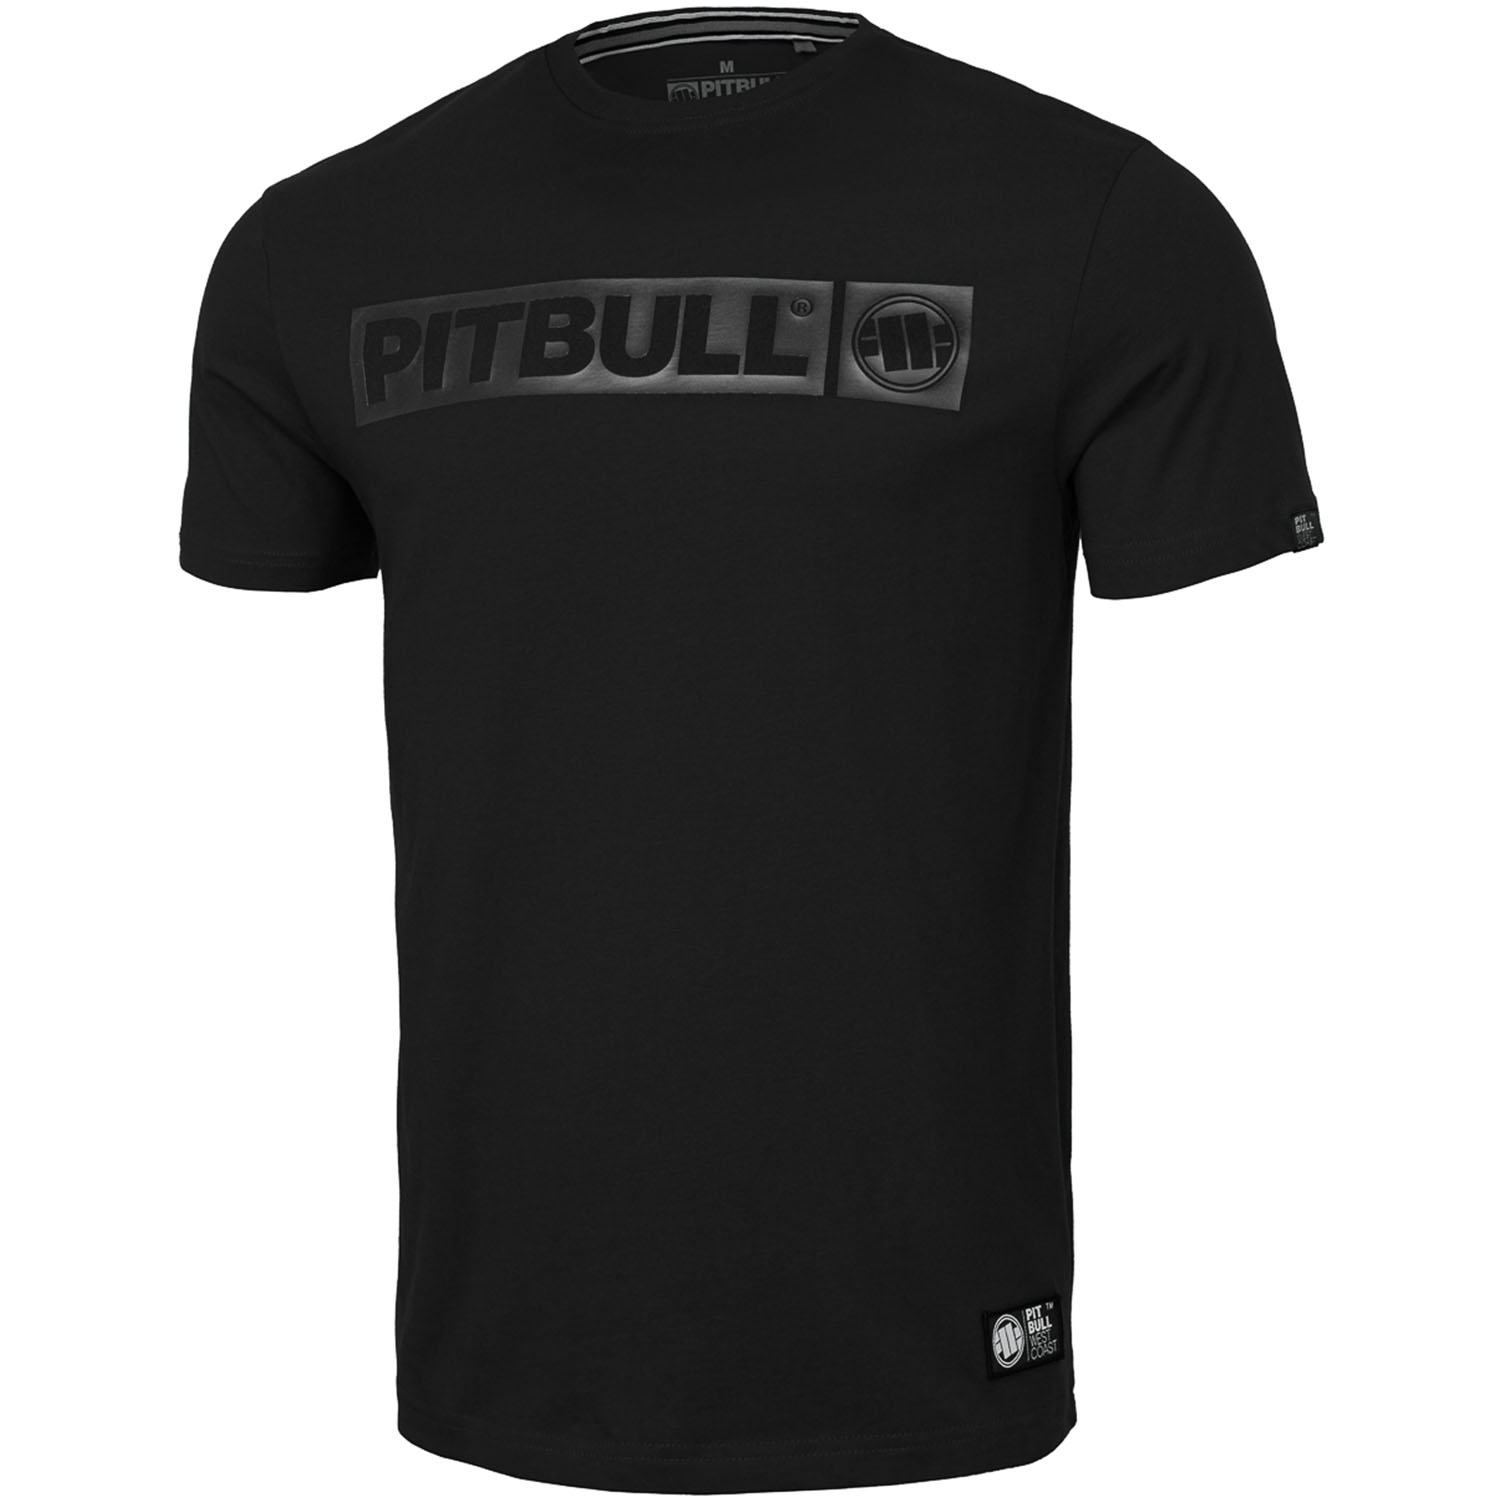 Pit Bull West Coast T-Shirt, Hilltop All Black, schwarz